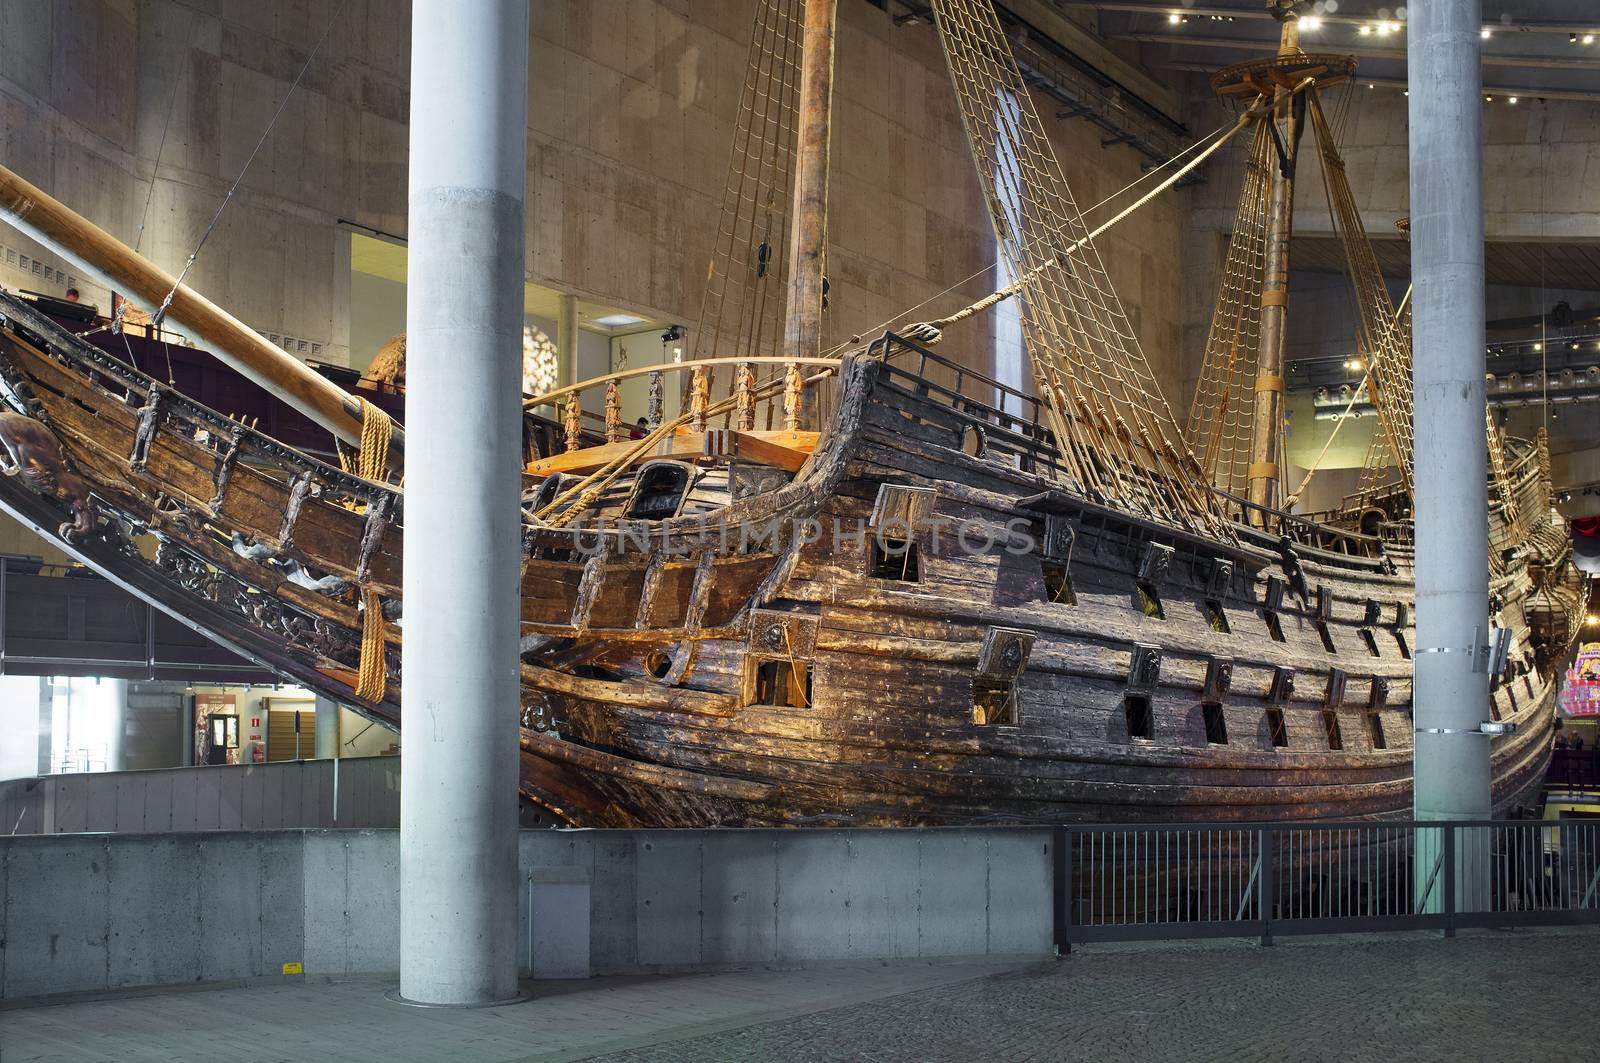 Vasa Museum by Stocksnapper